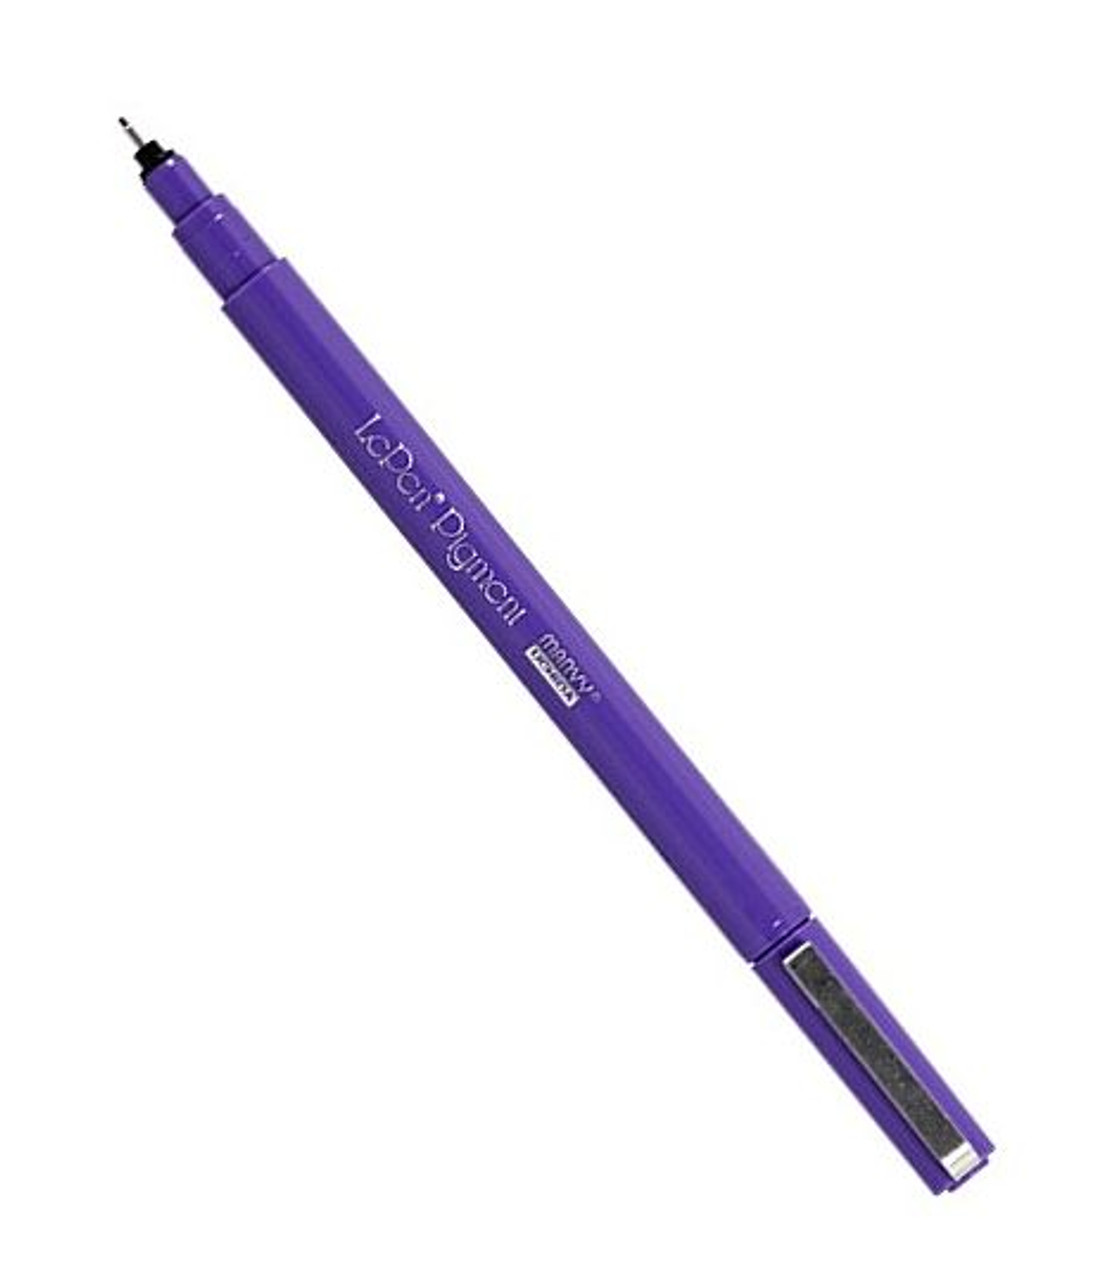 Uchida Le Pen Colored Writing Pen, Dark Gray